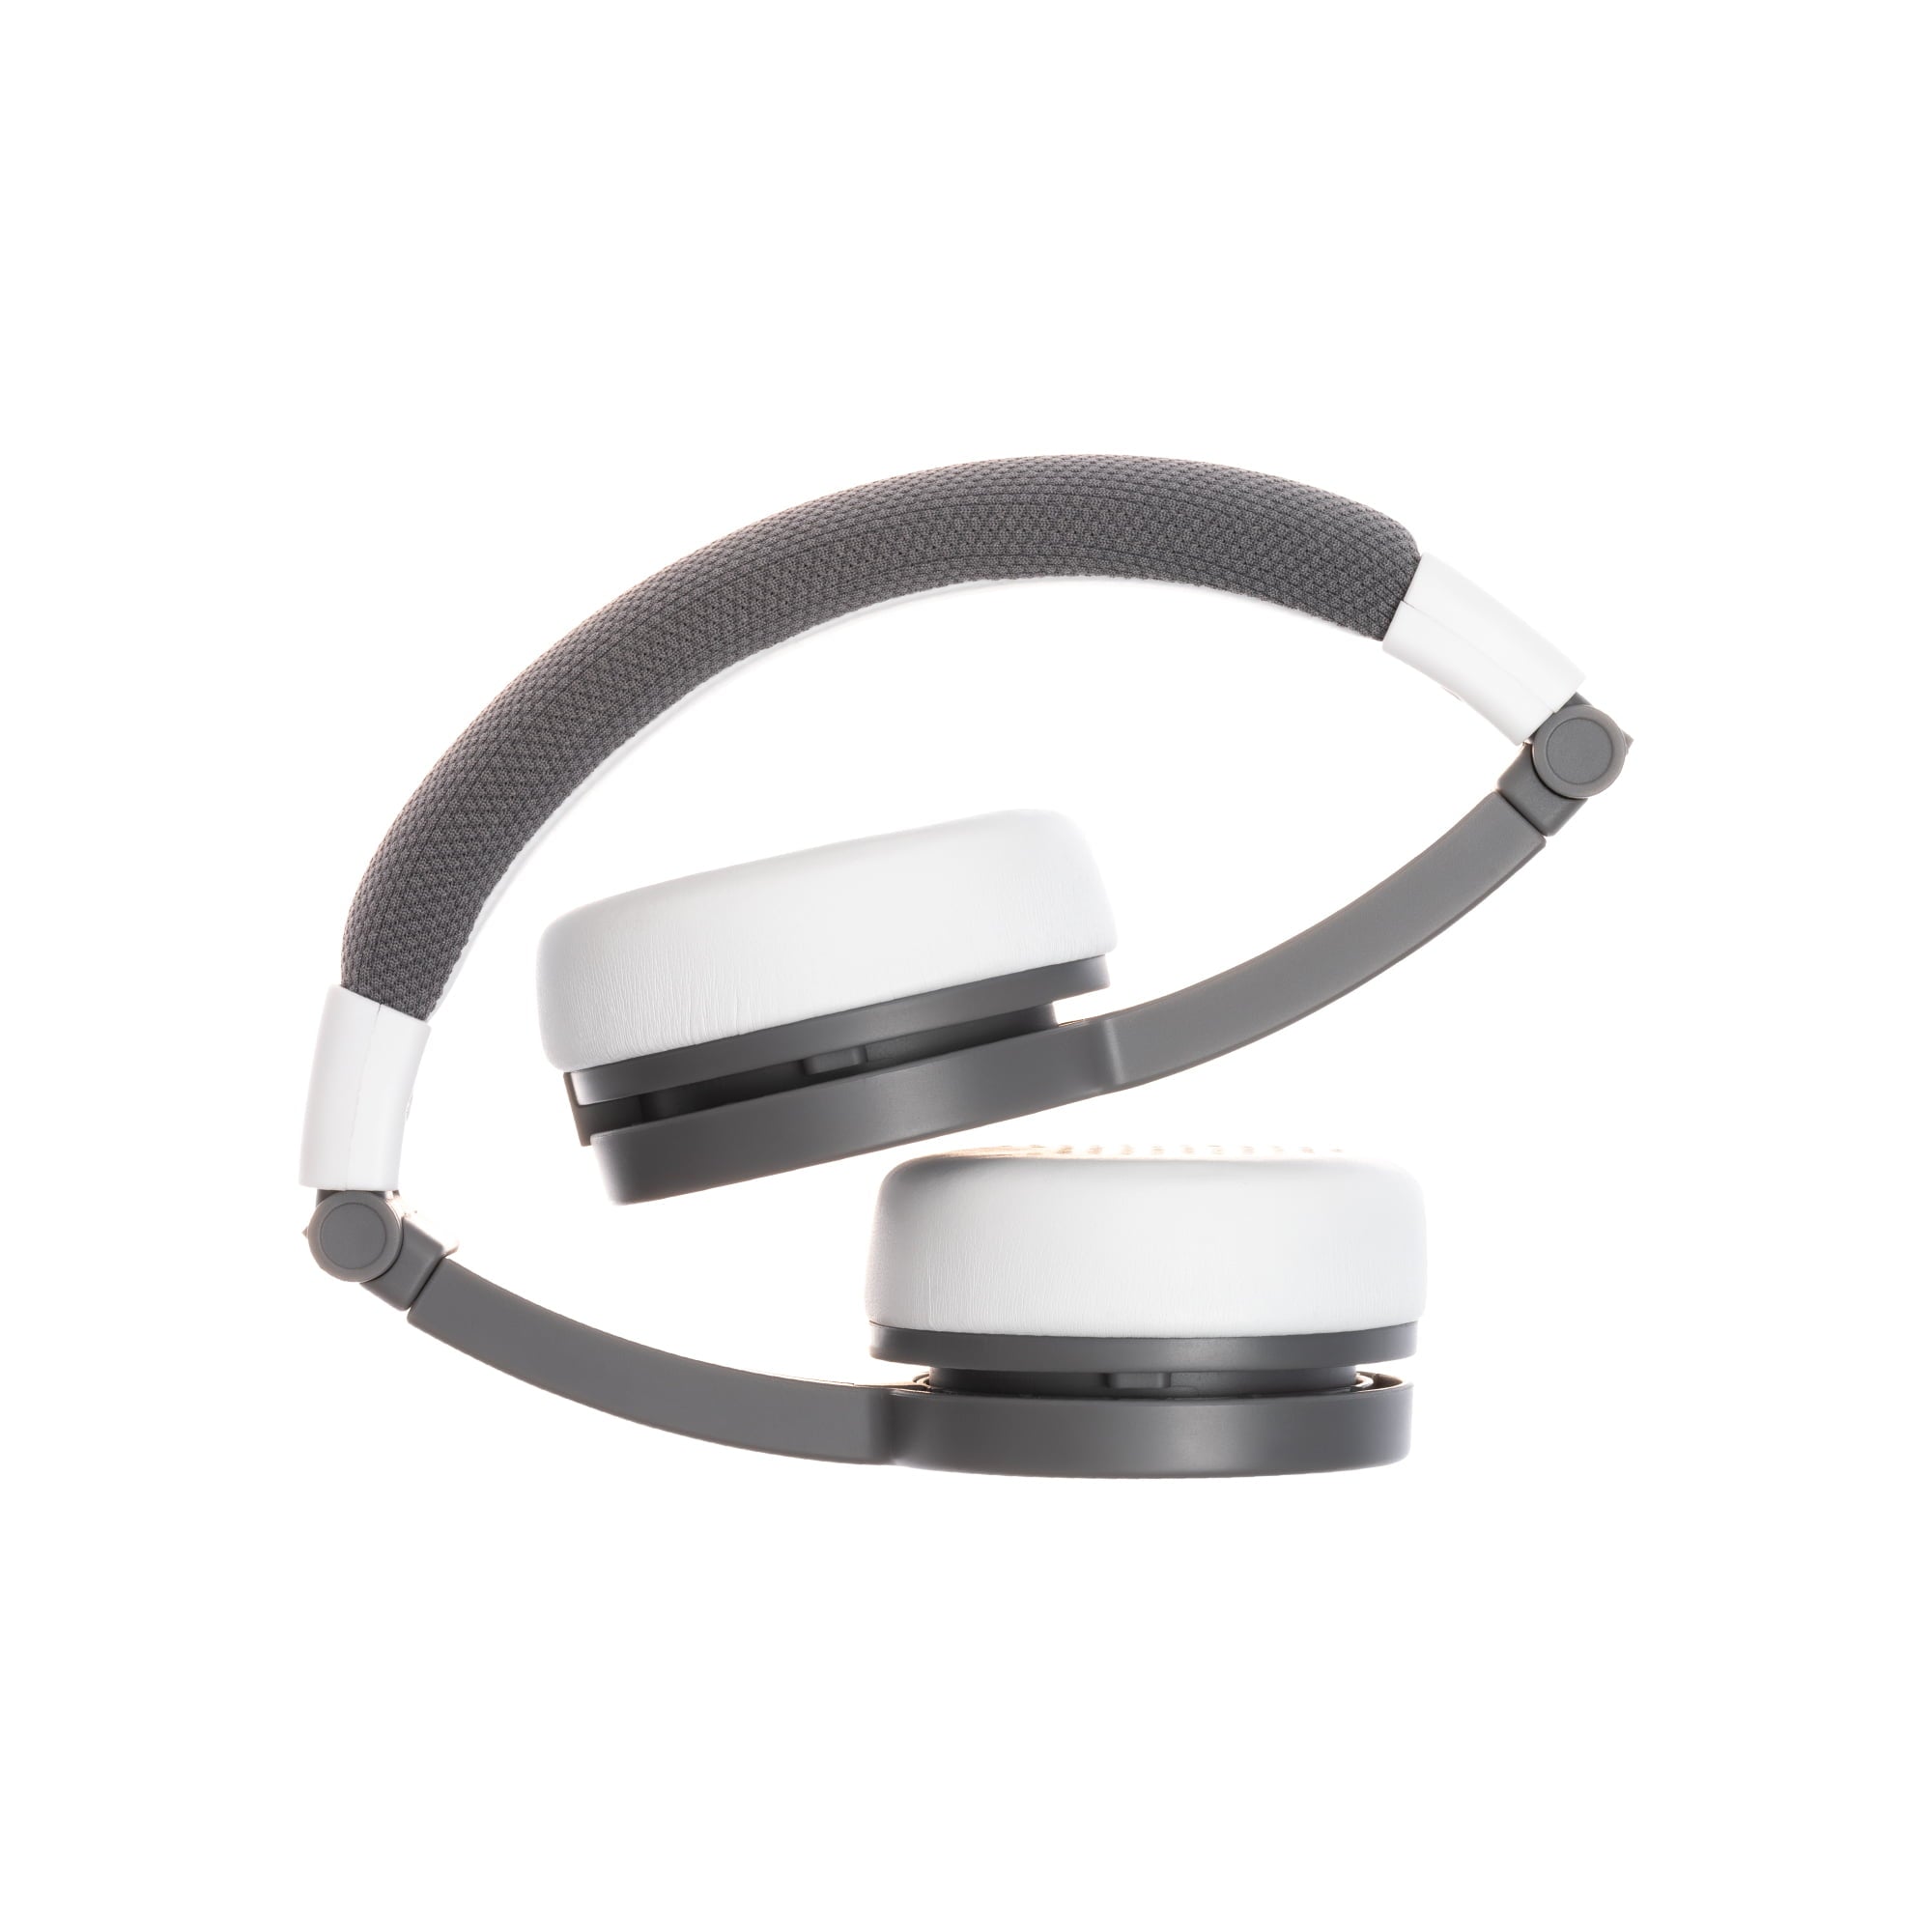 Tonies Foldable Headphones - ANB Baby -840173600320$20 - $50